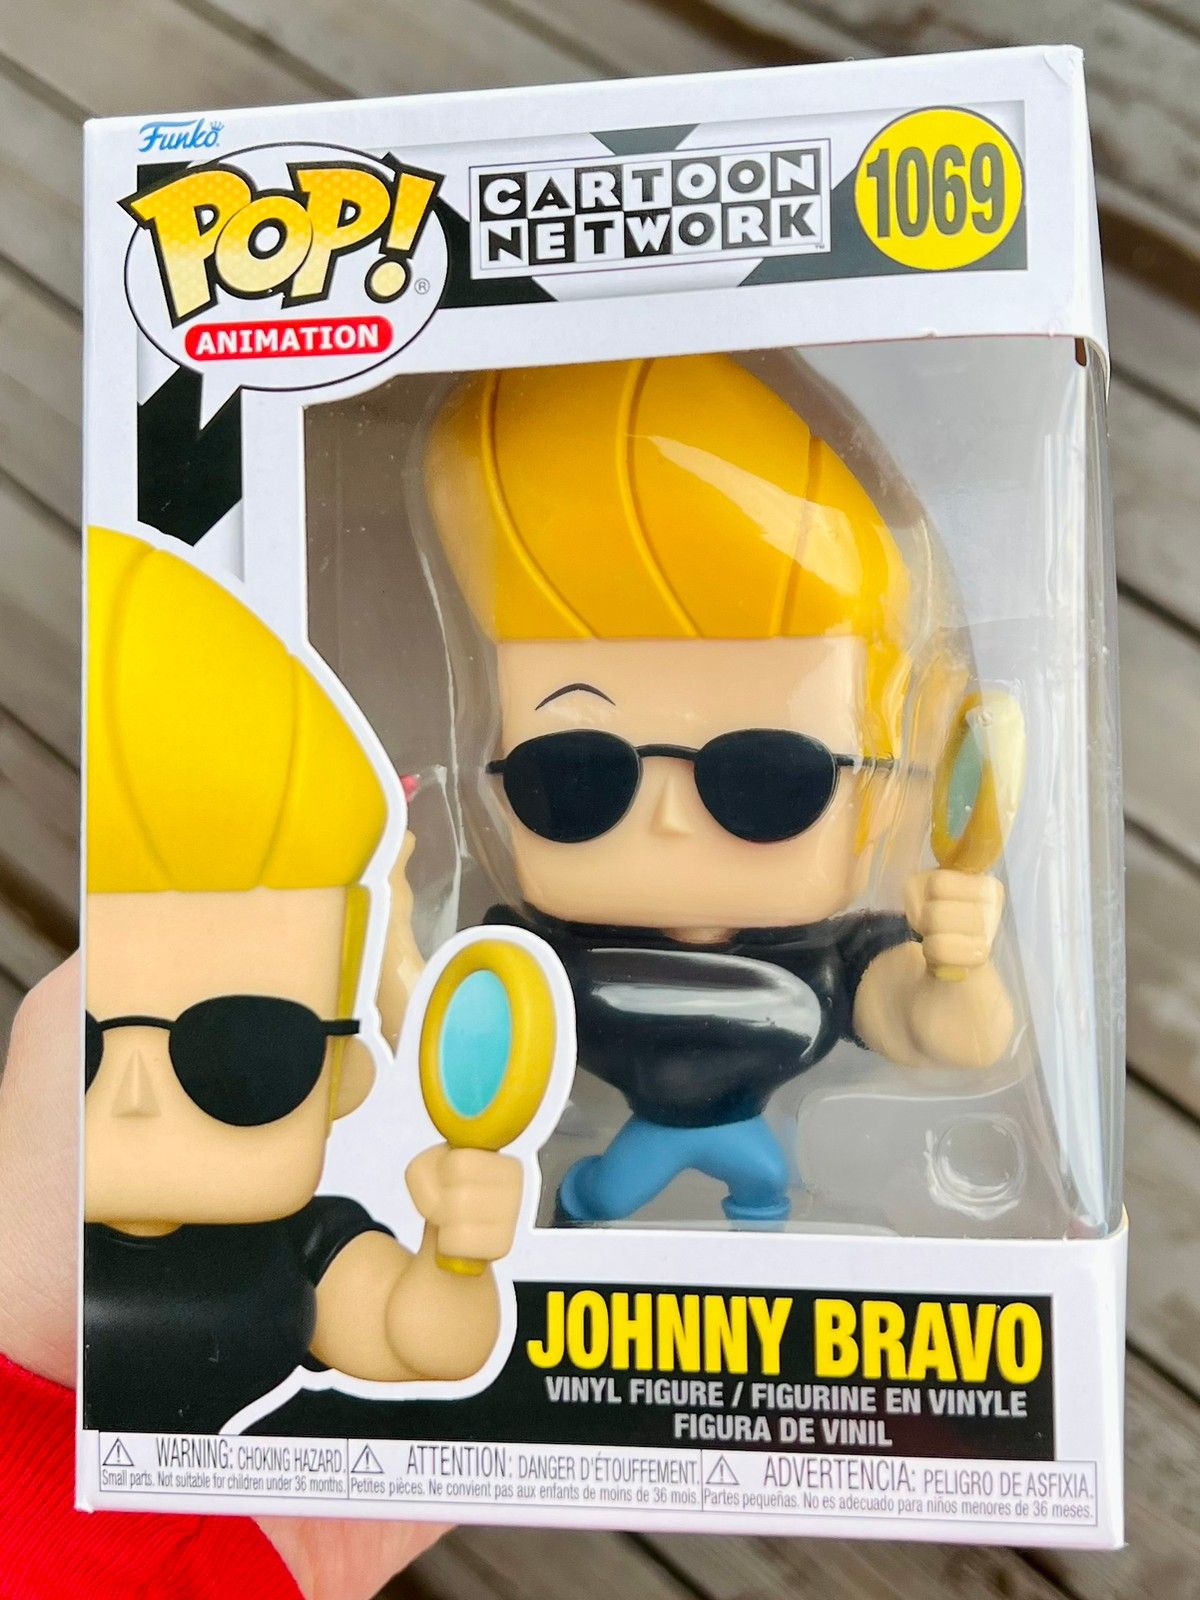 Funko Pop! Johnny Bravo, Cartoon Network (1069)